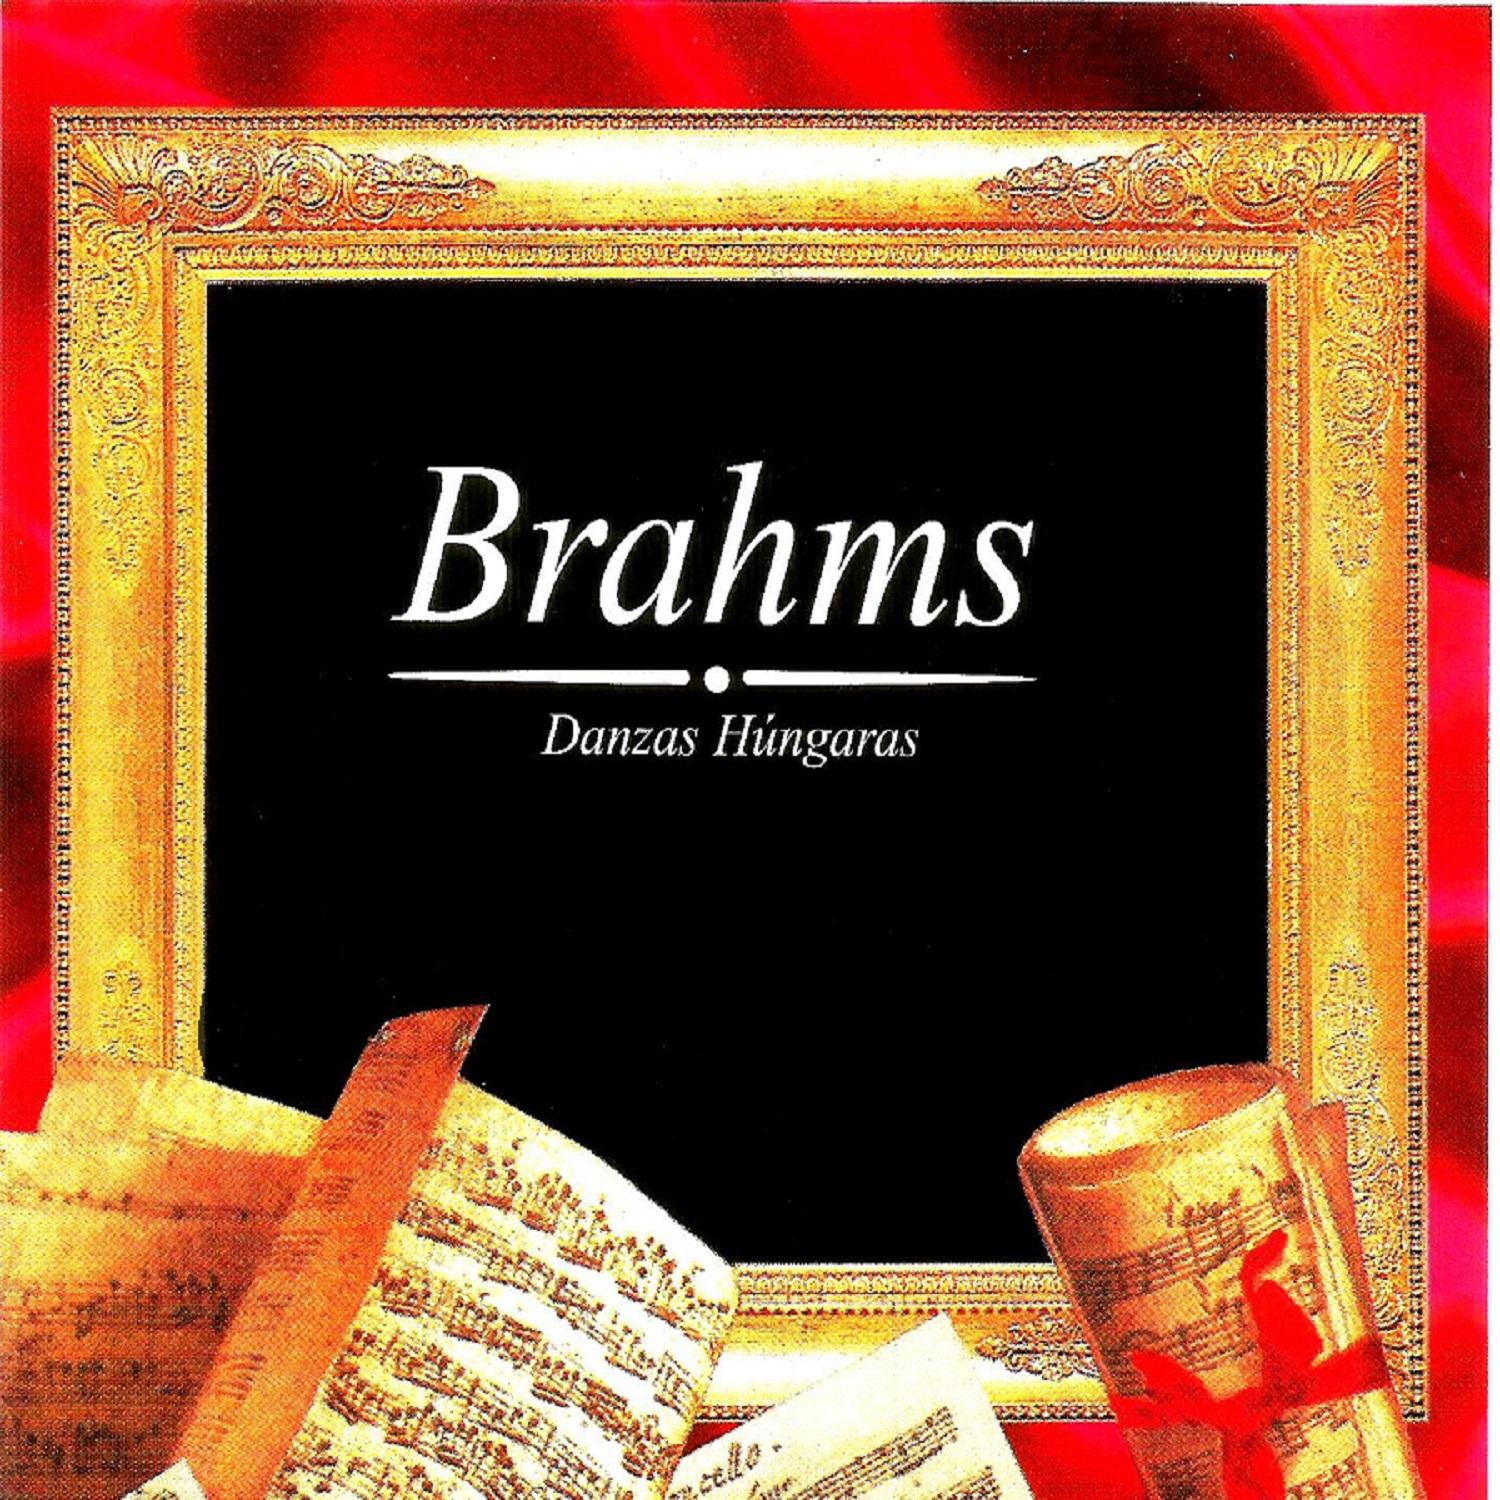 Brahms, Danzas Hu ngaras